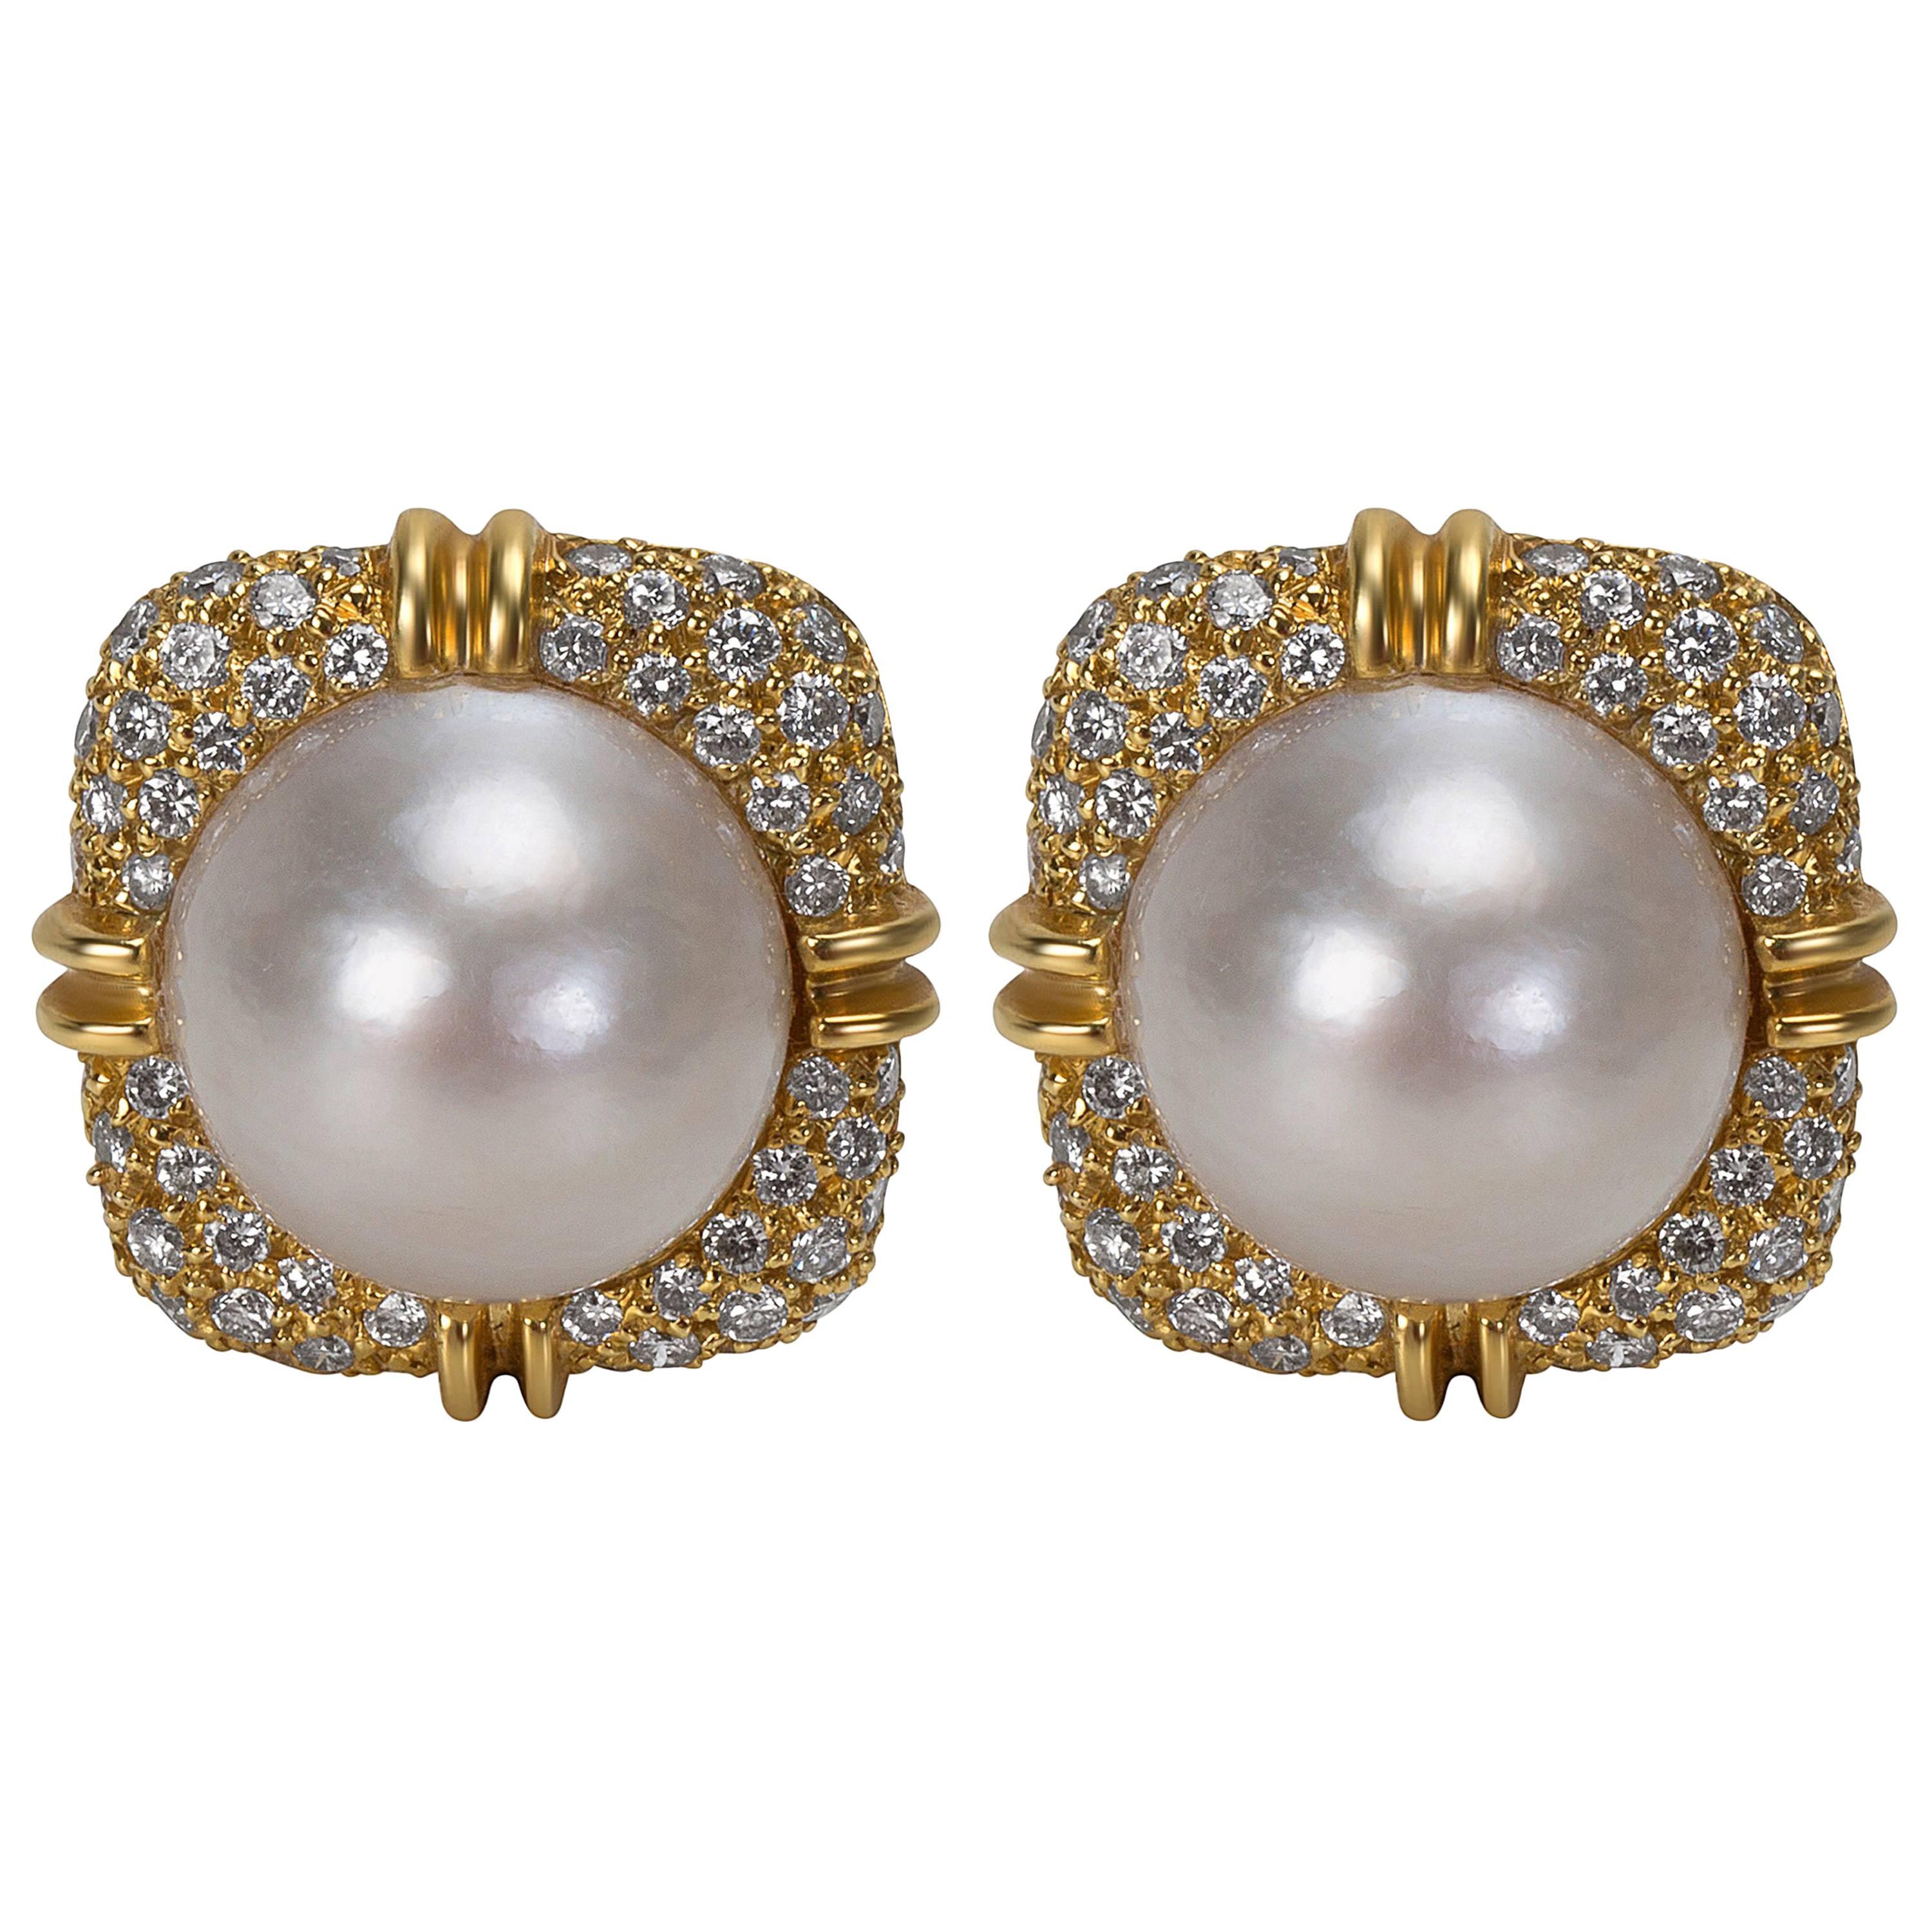 Makur Diamond and Mabe Pearl Earrings in 18 Karat Gold 2.00 Carat